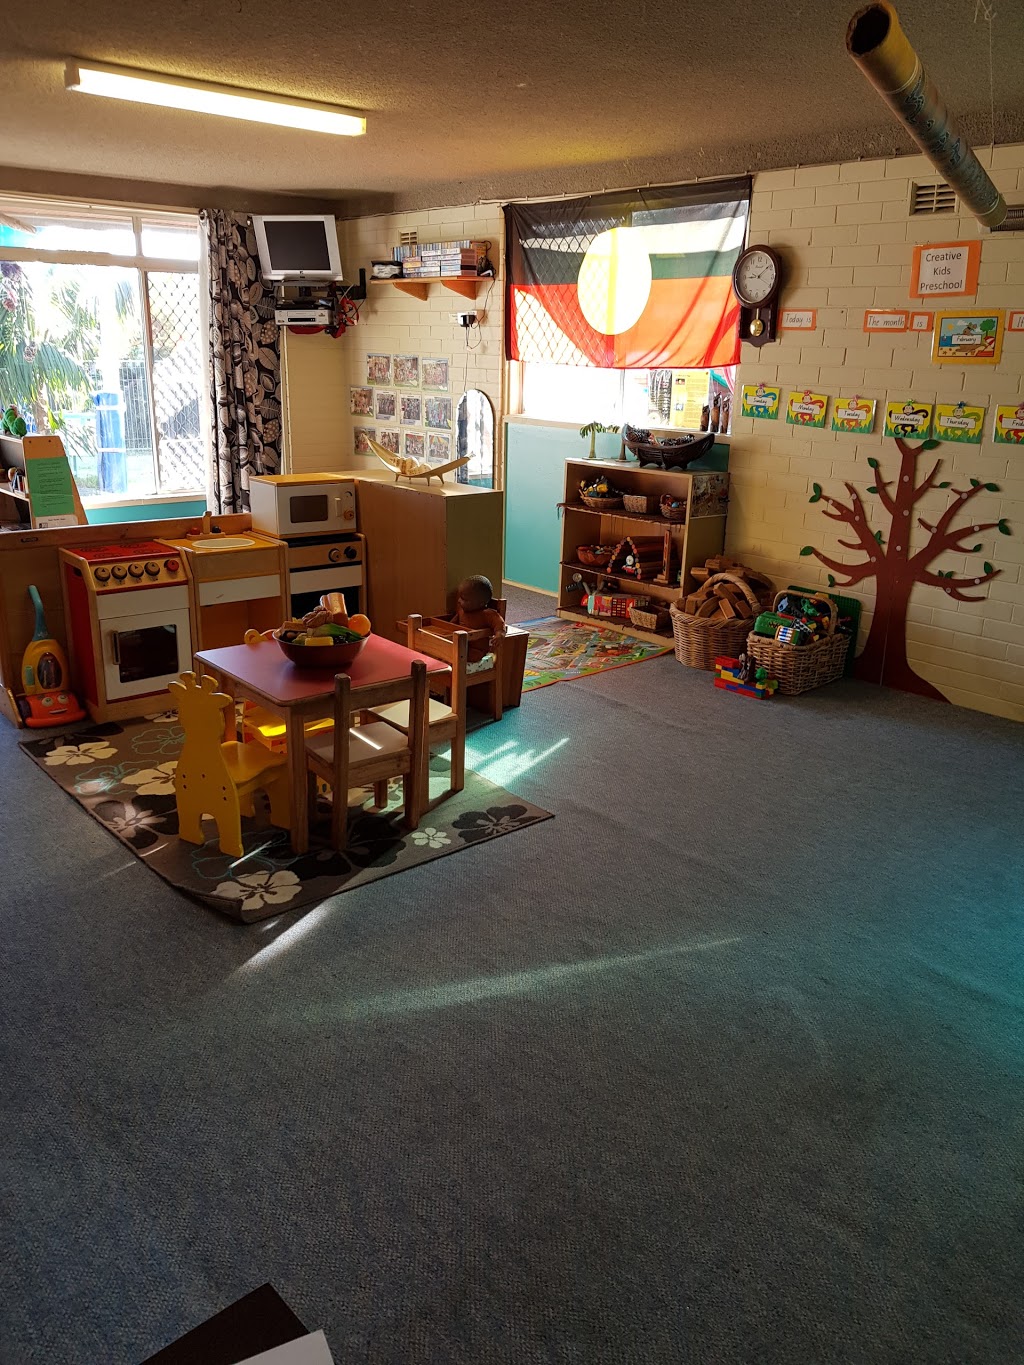 Creative Kids Preschool | school | 19 Williams St, Belmont South NSW 2280, Australia | 0249453122 OR +61 2 4945 3122